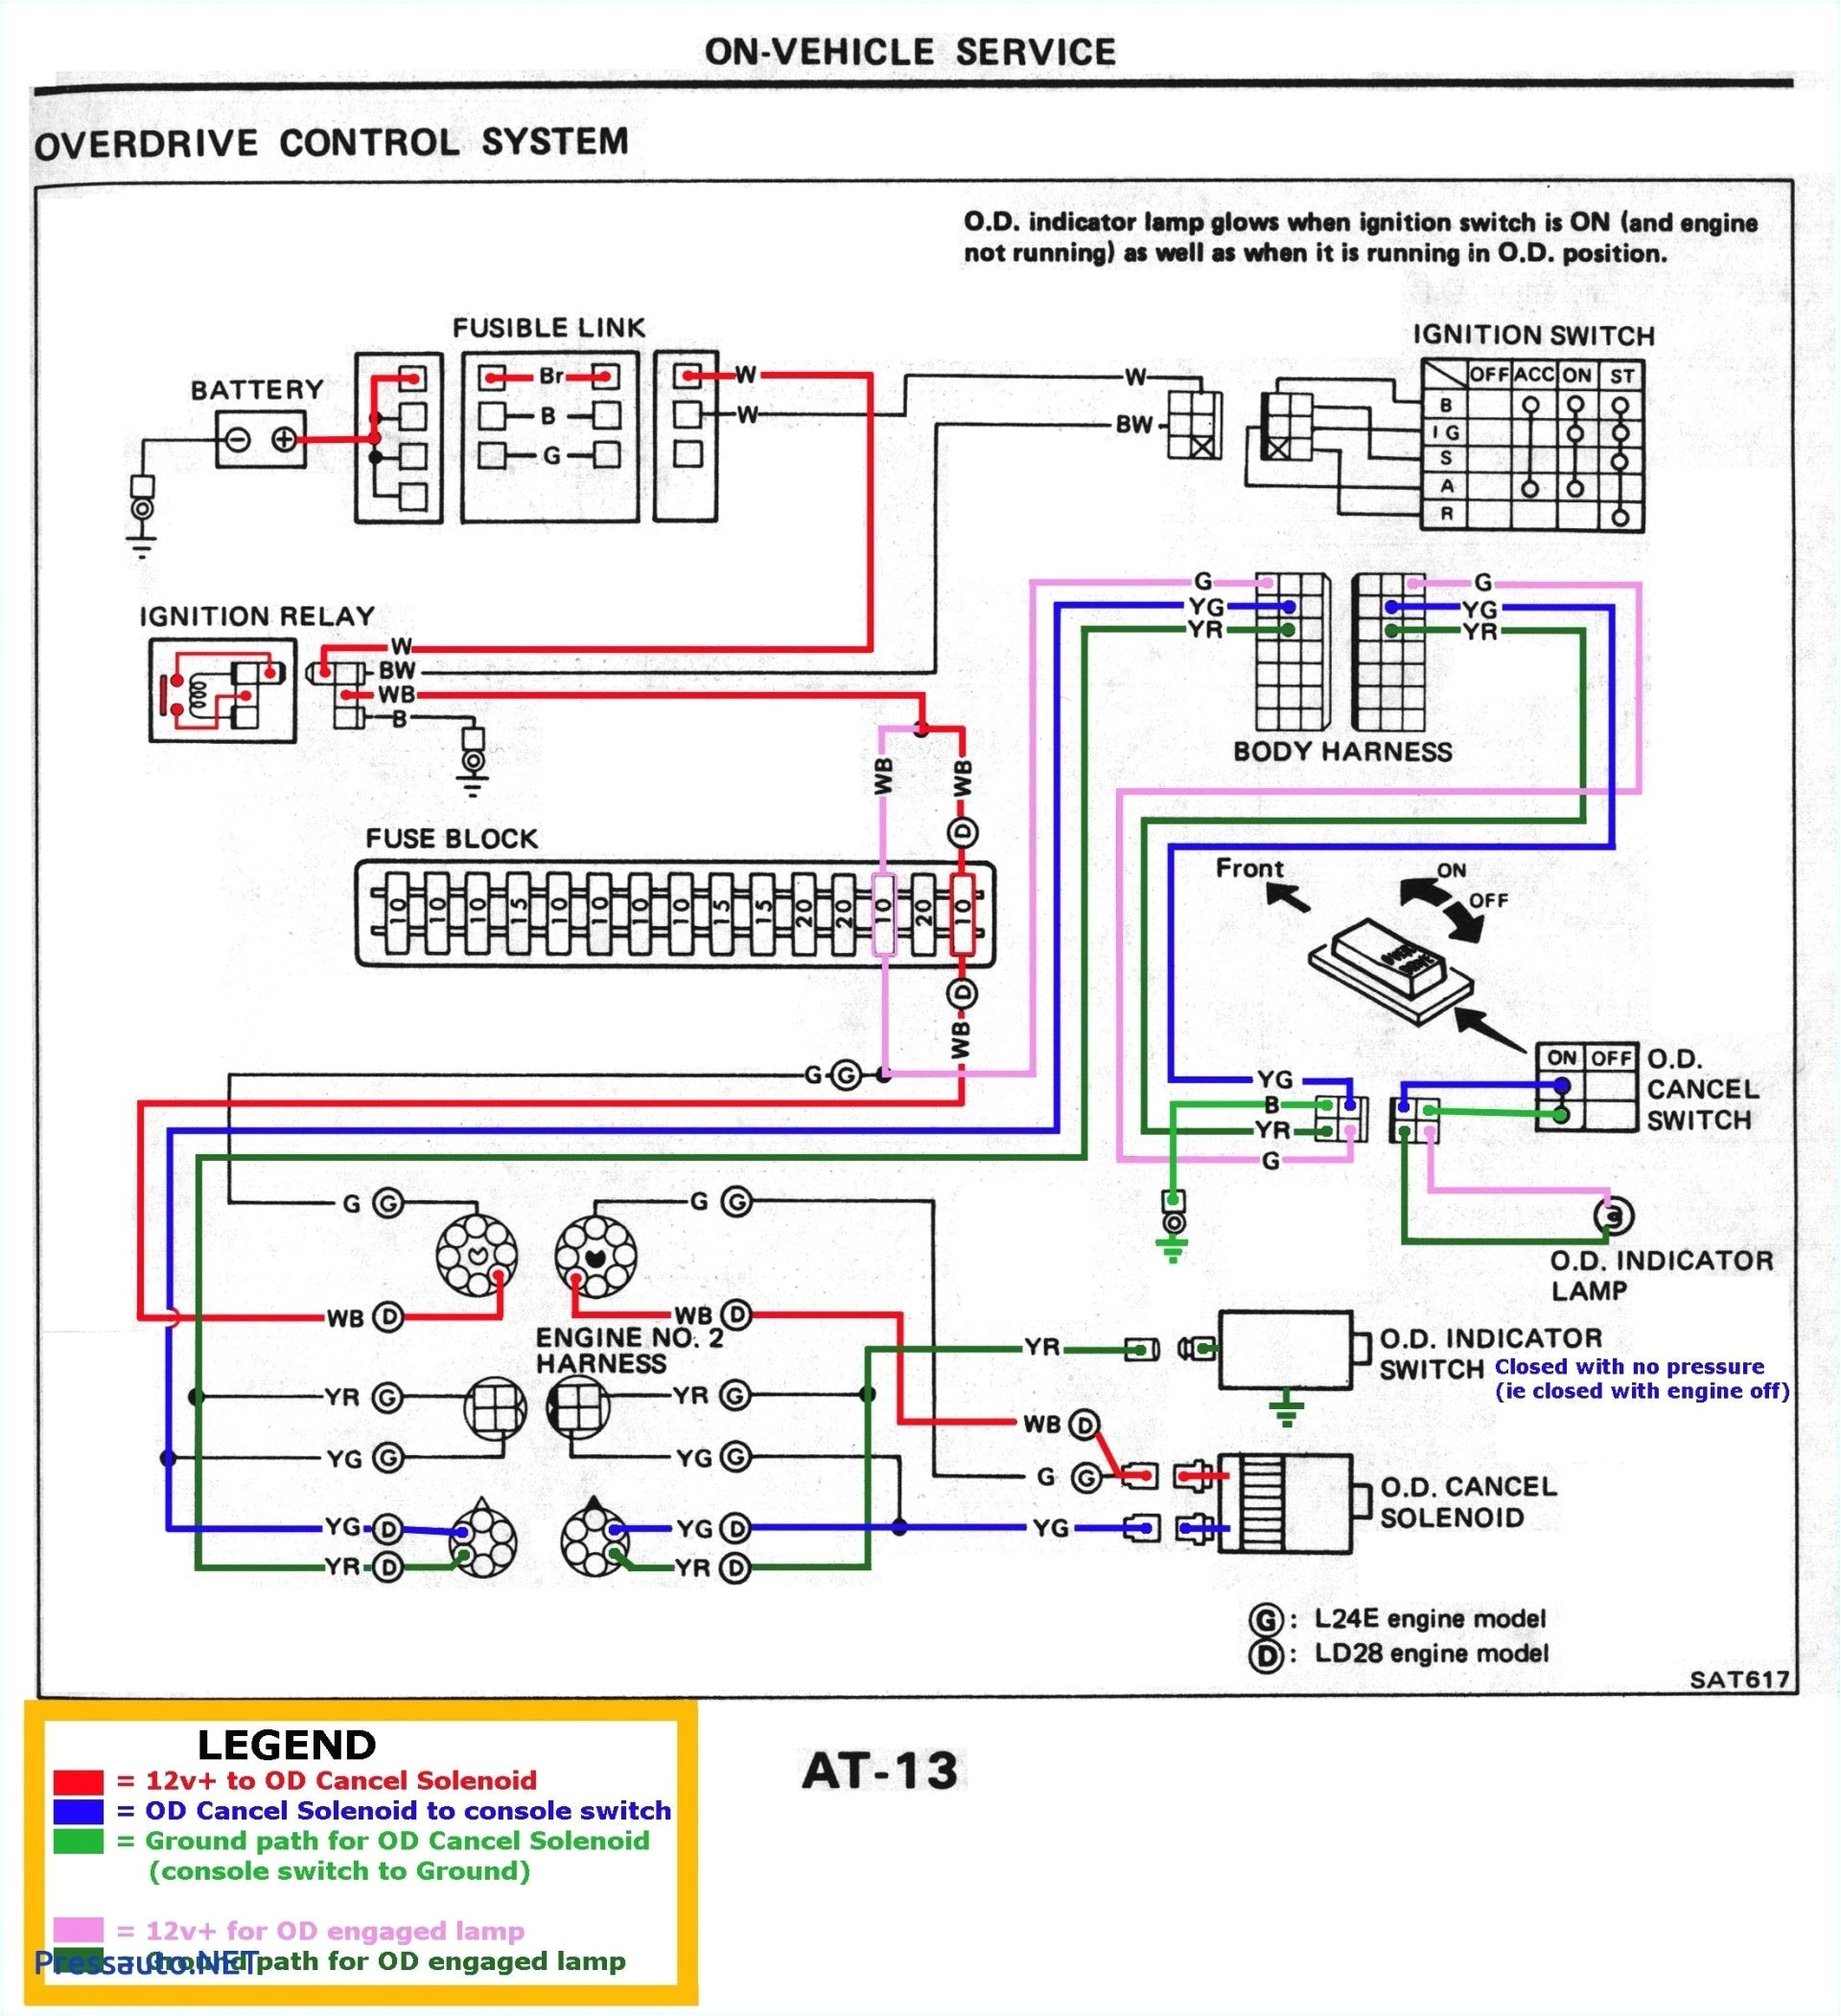 mad alternator wiring diagram for chevy wiring diagram completed mad alternator wiring diagram